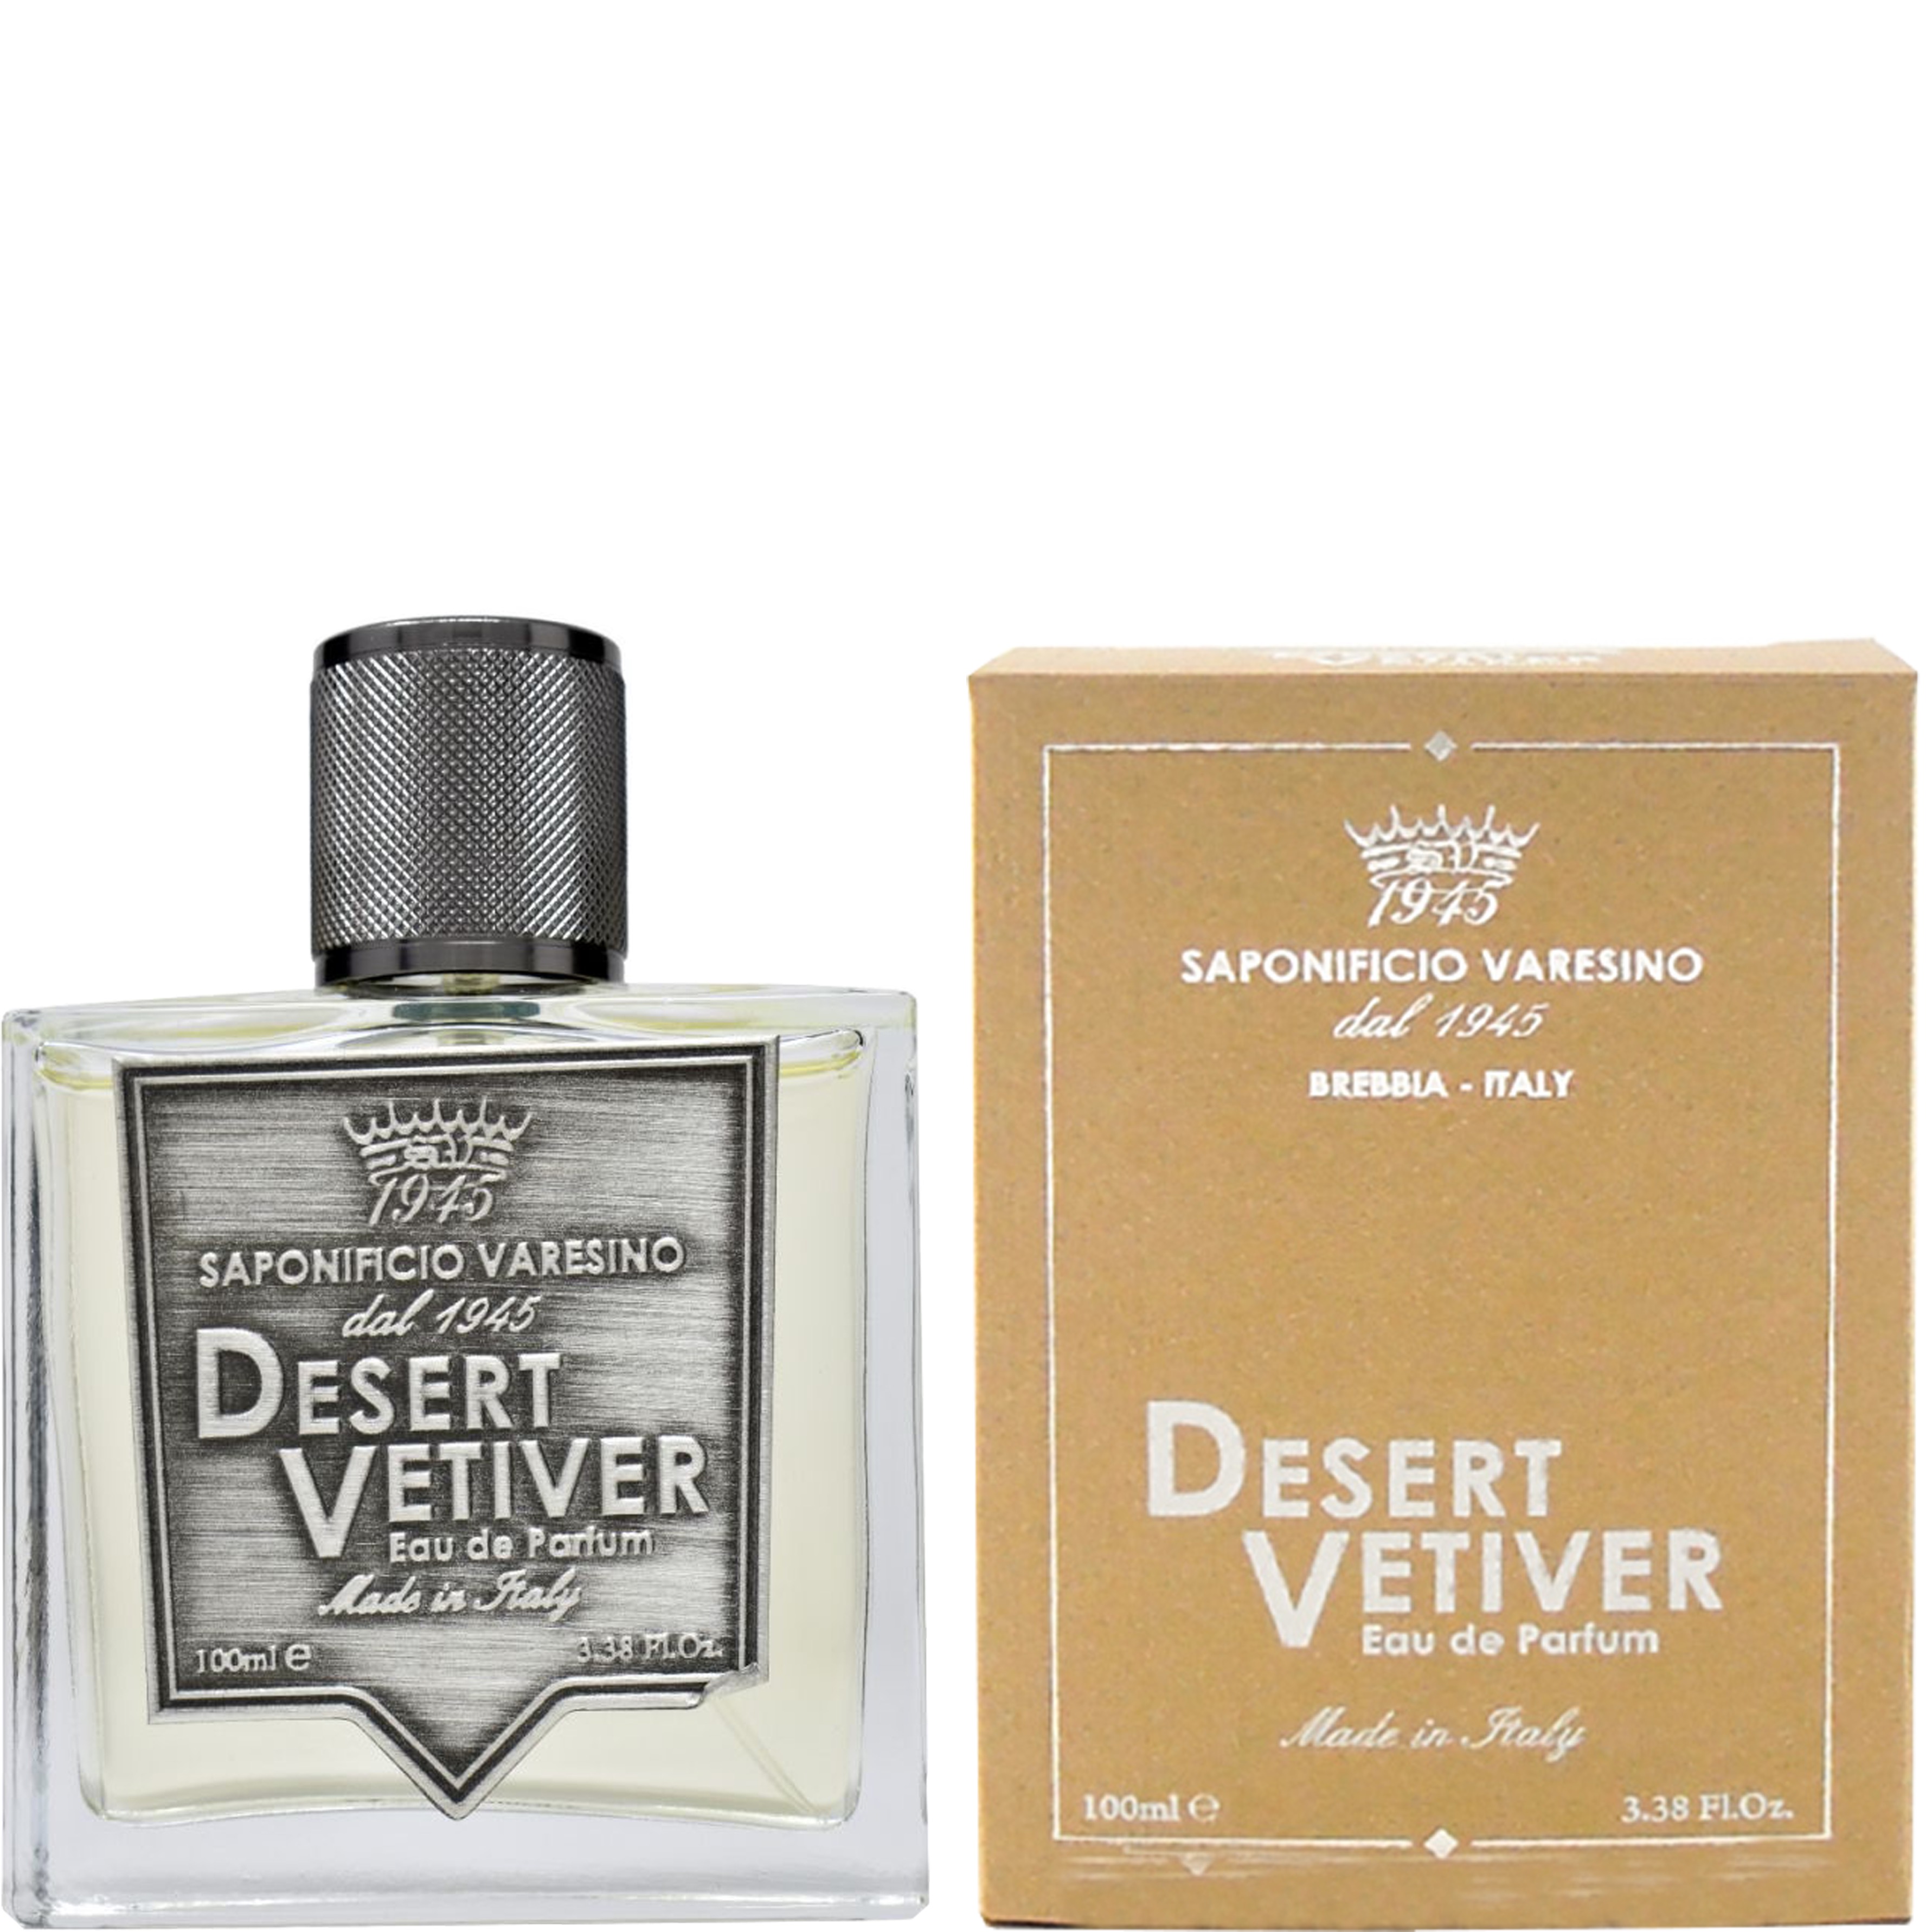 Saponificio Varesino Eau de Parfum Desert Vetiver - 1.1 - SV-R0138